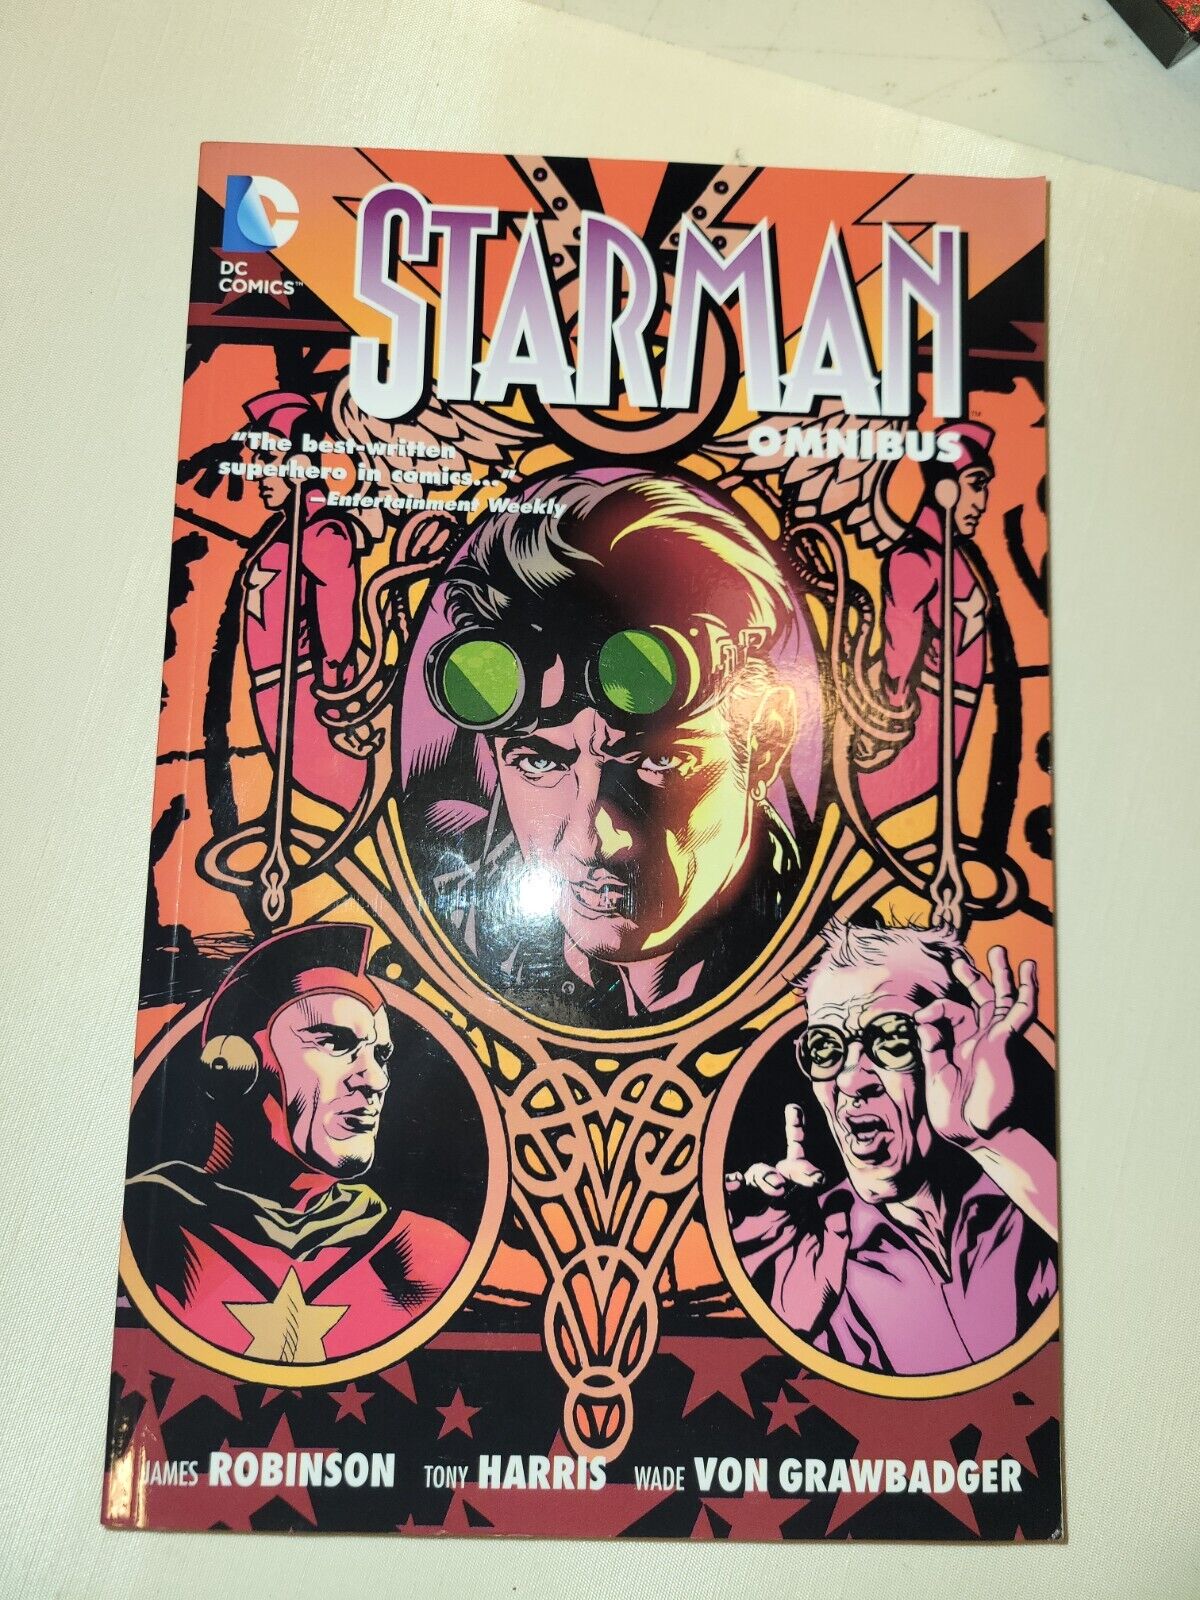 The Starman Omnibus #1 (DC Comics, July 2008) TPB